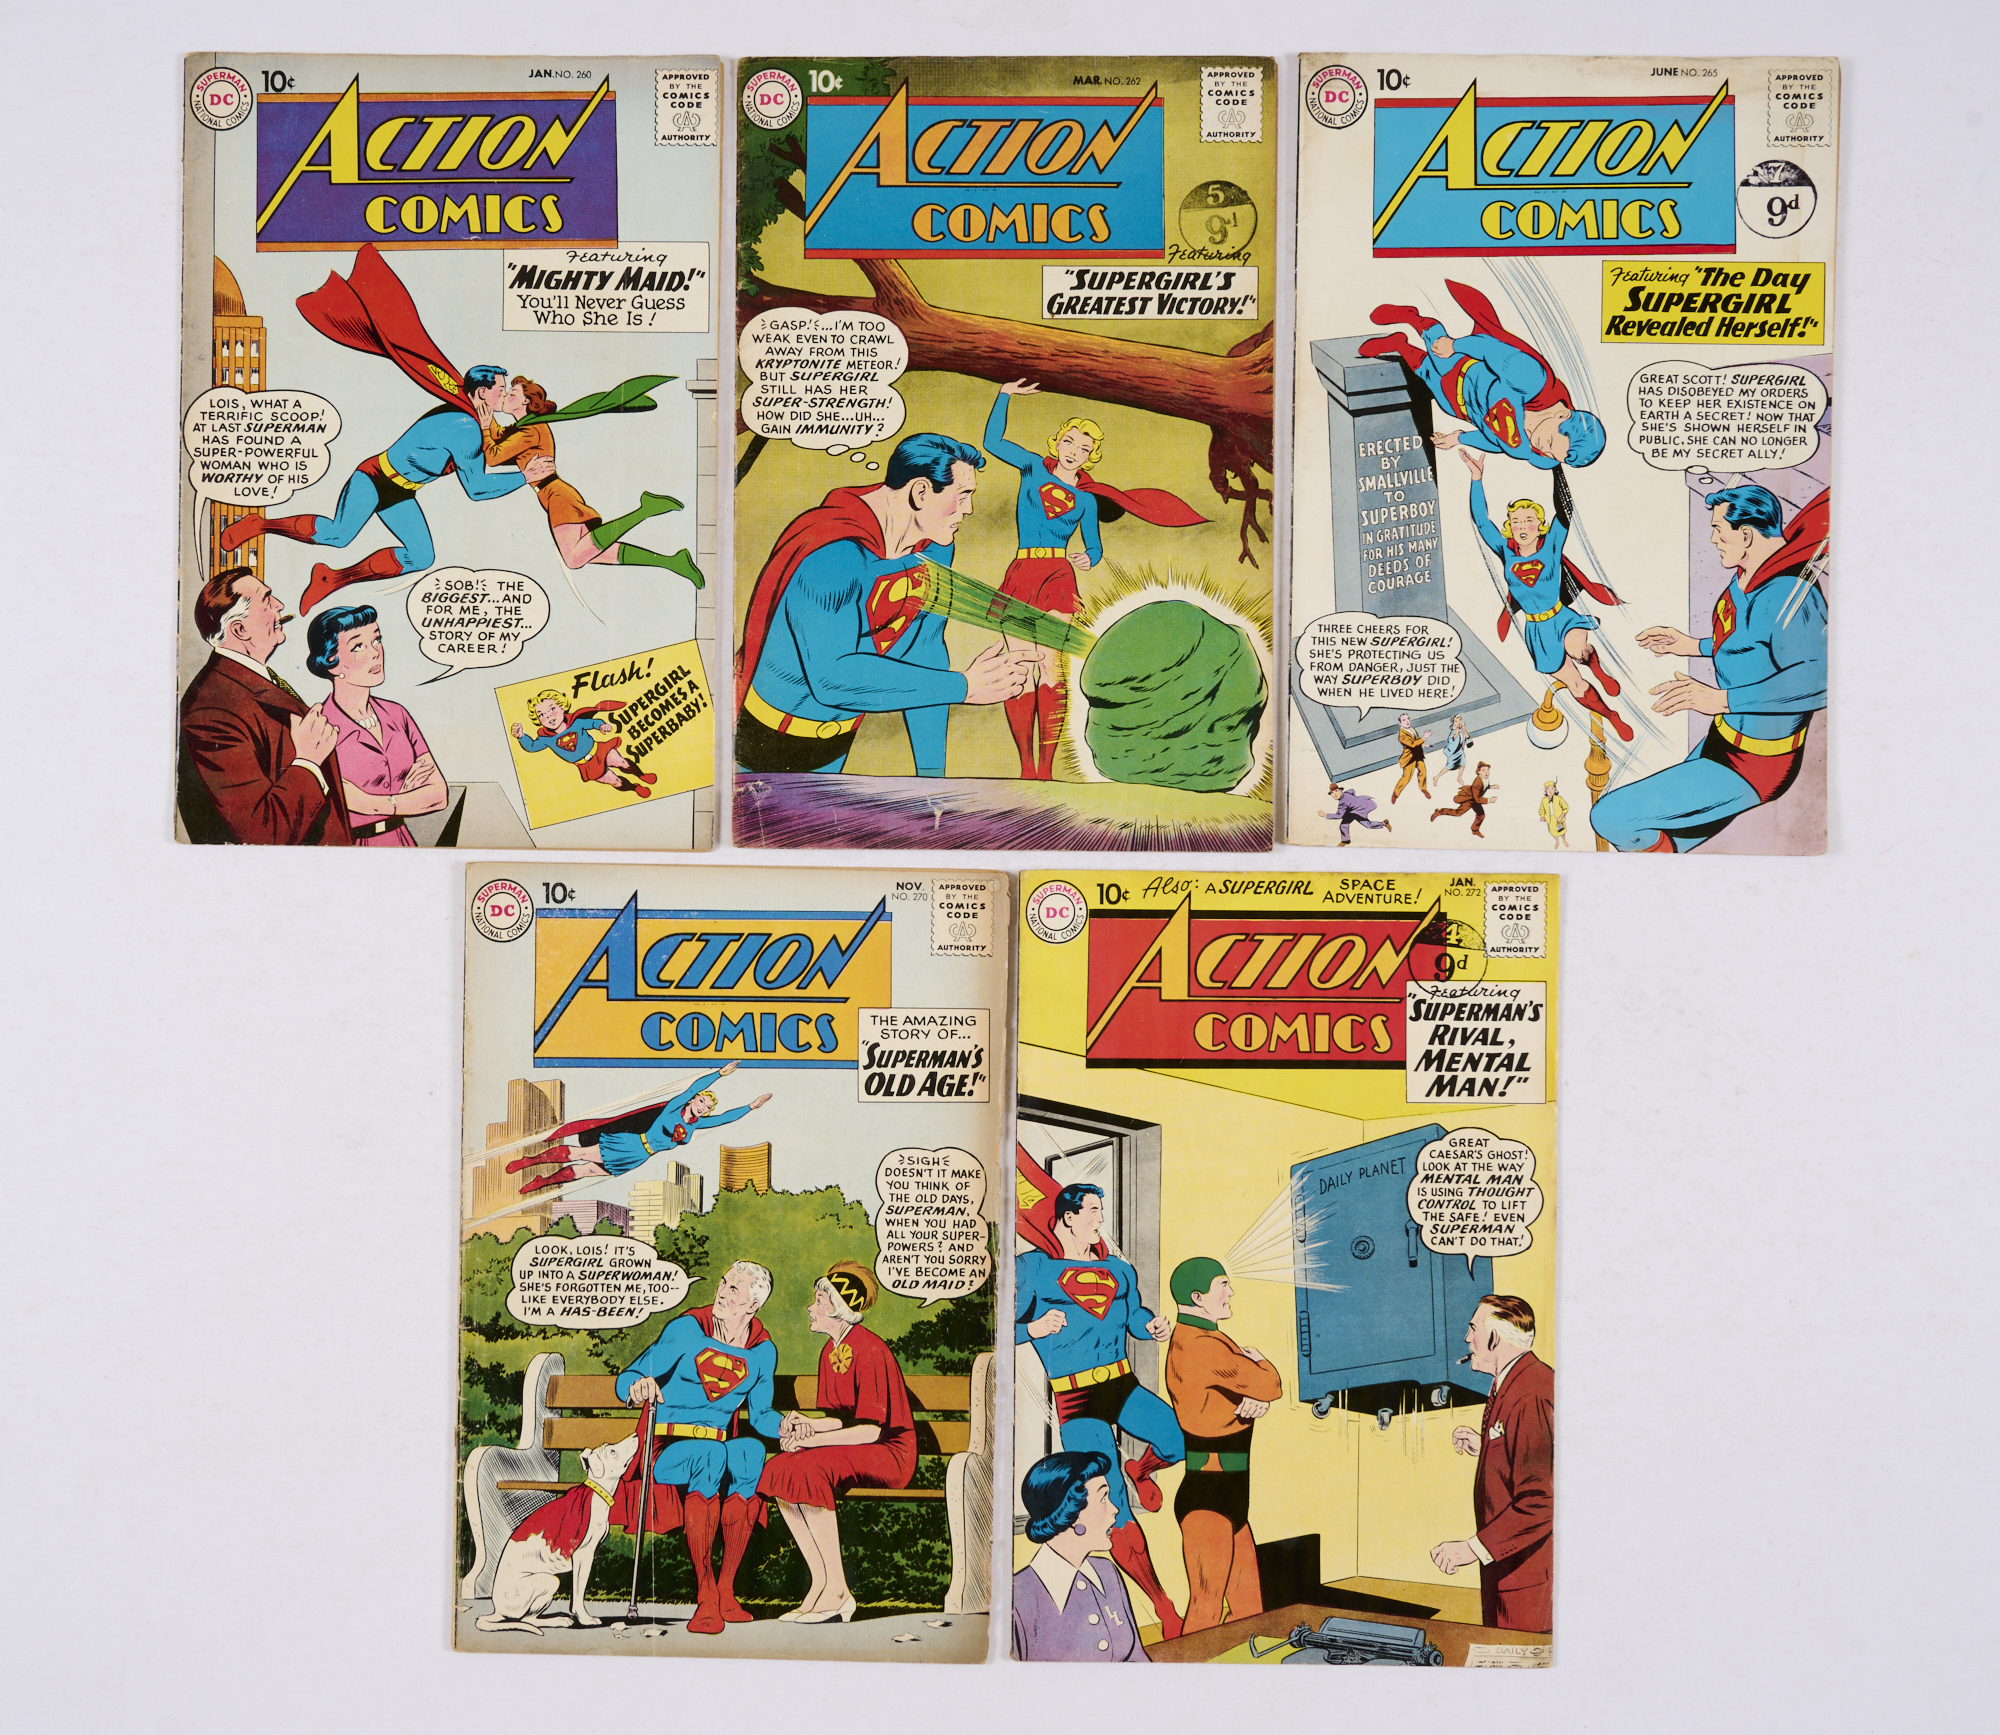 Action (1960-61) 260, 262, 265, 270, 272 (# 260, 270 cents copies) [vg-/vg+] (5). No Reserve